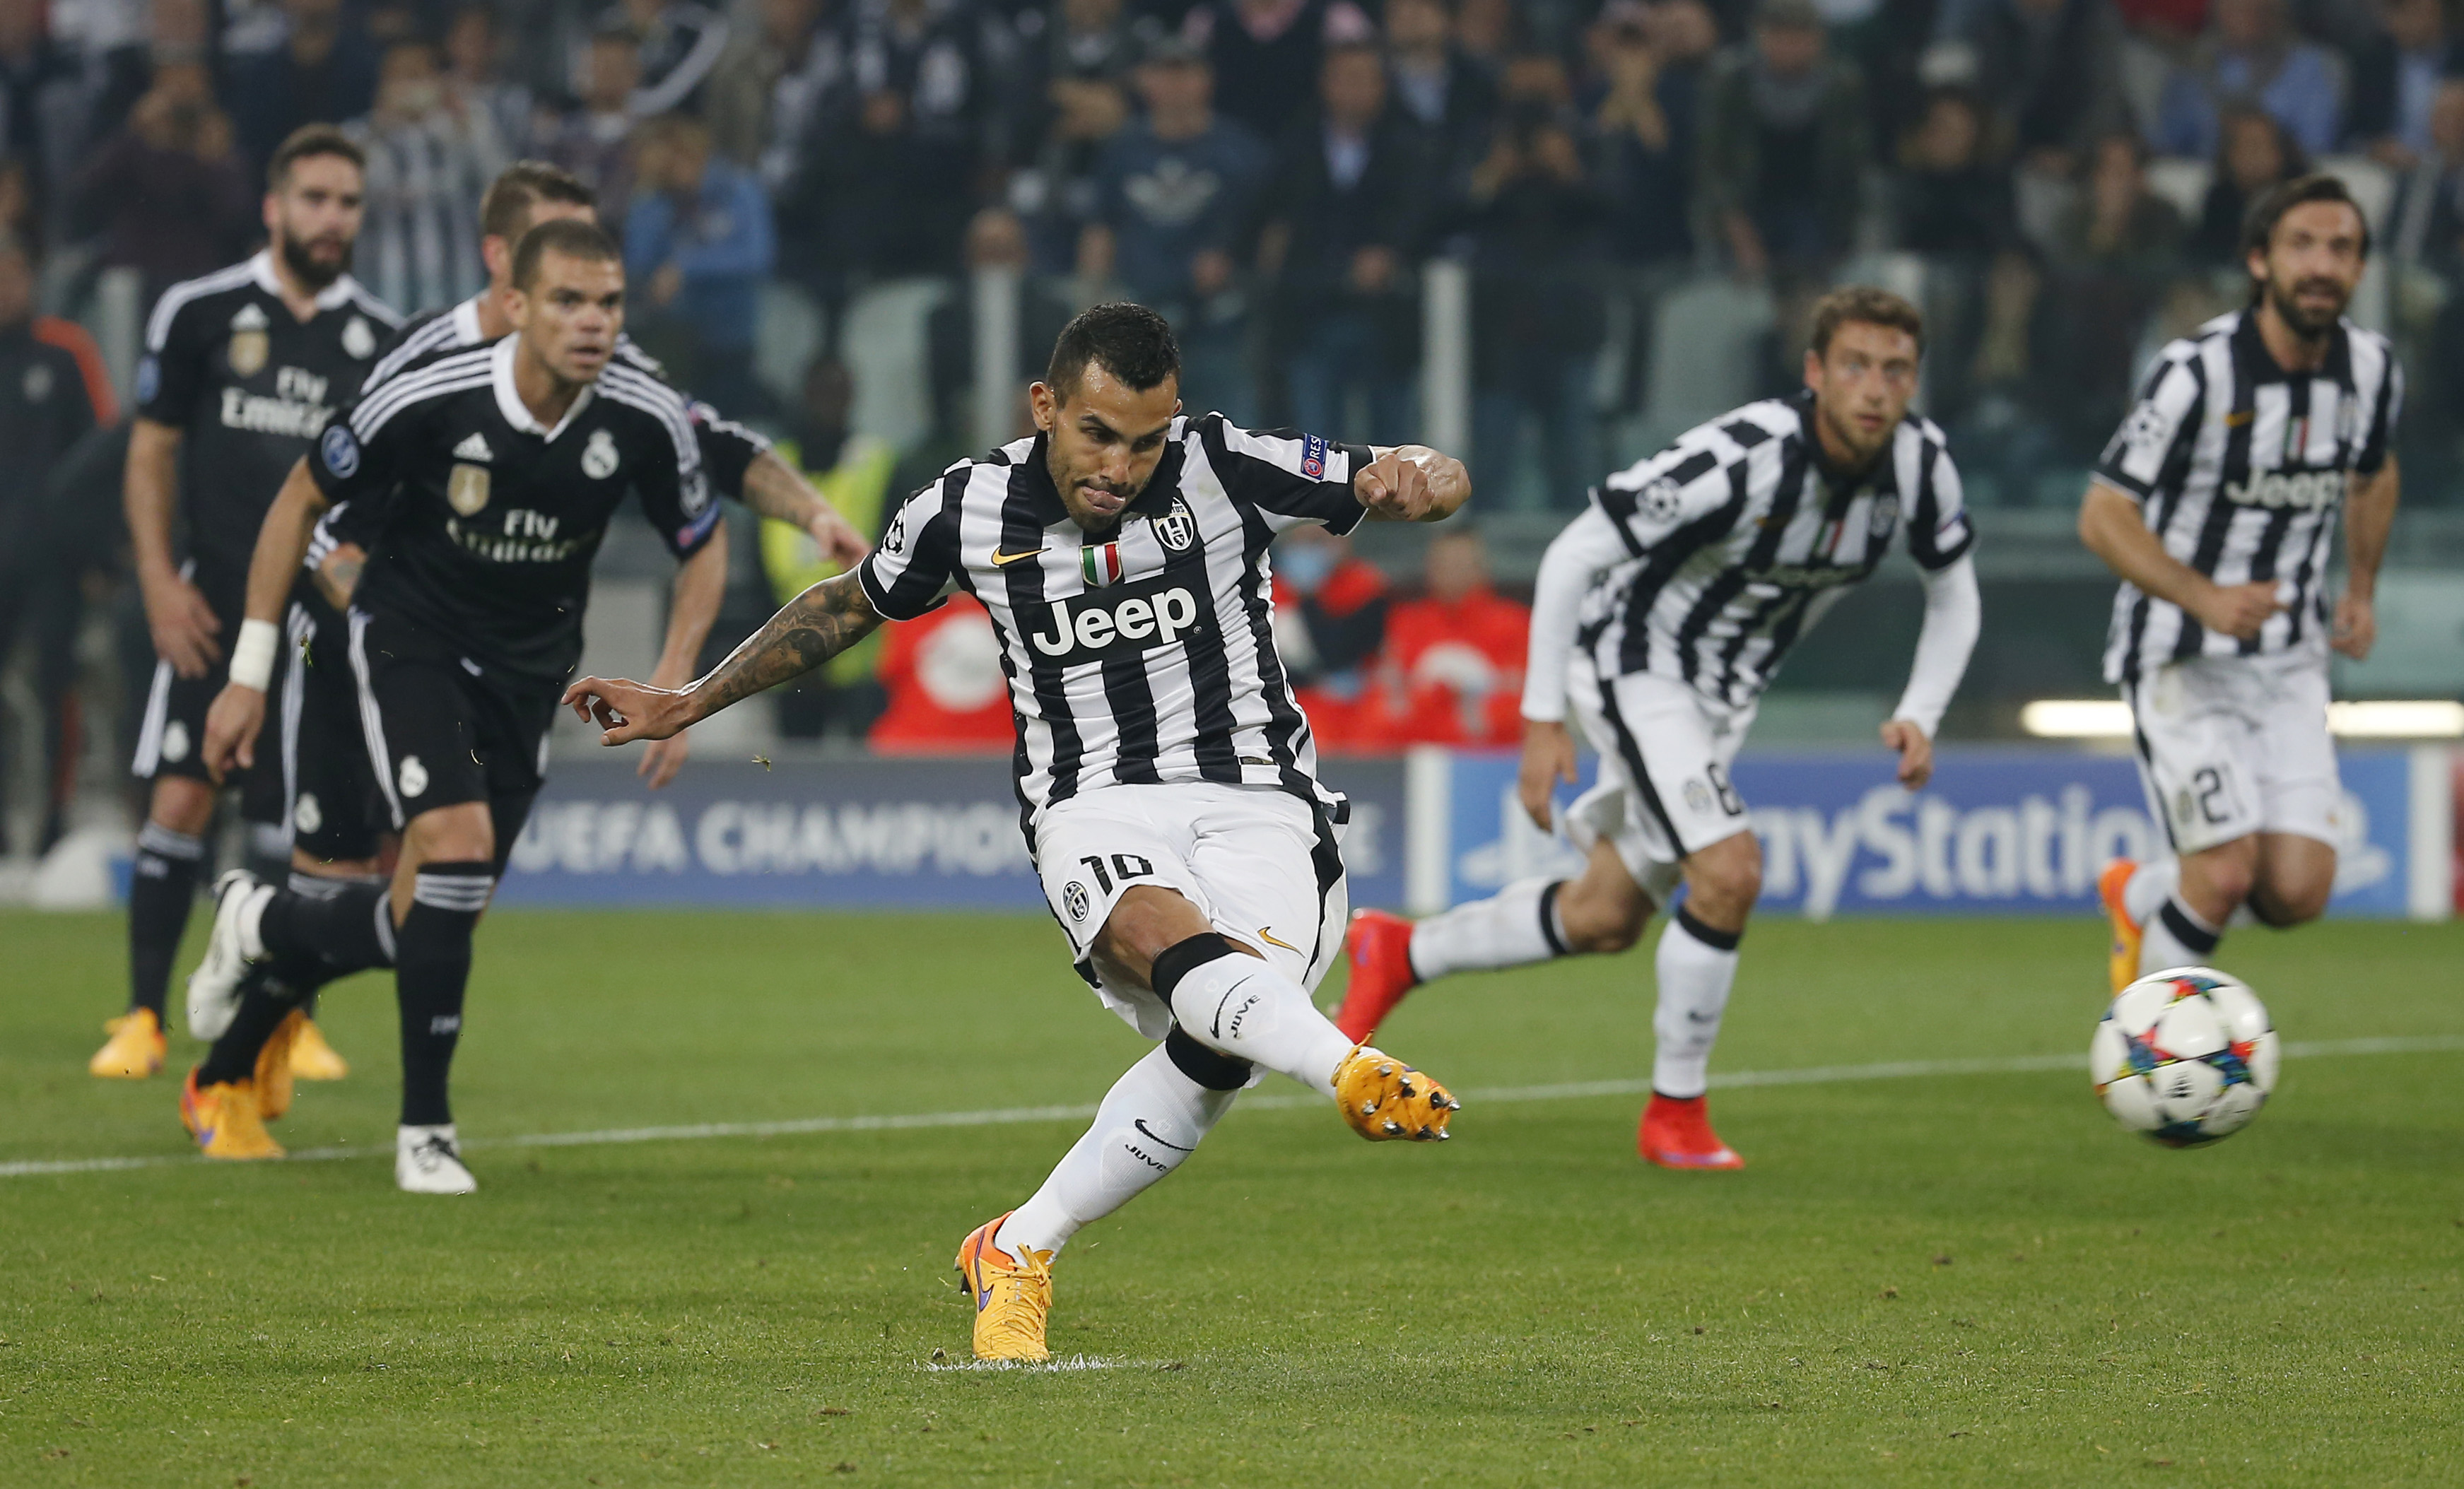 Juve's cut-price Tevez upstages Ronaldo, Bale in 2-1 win